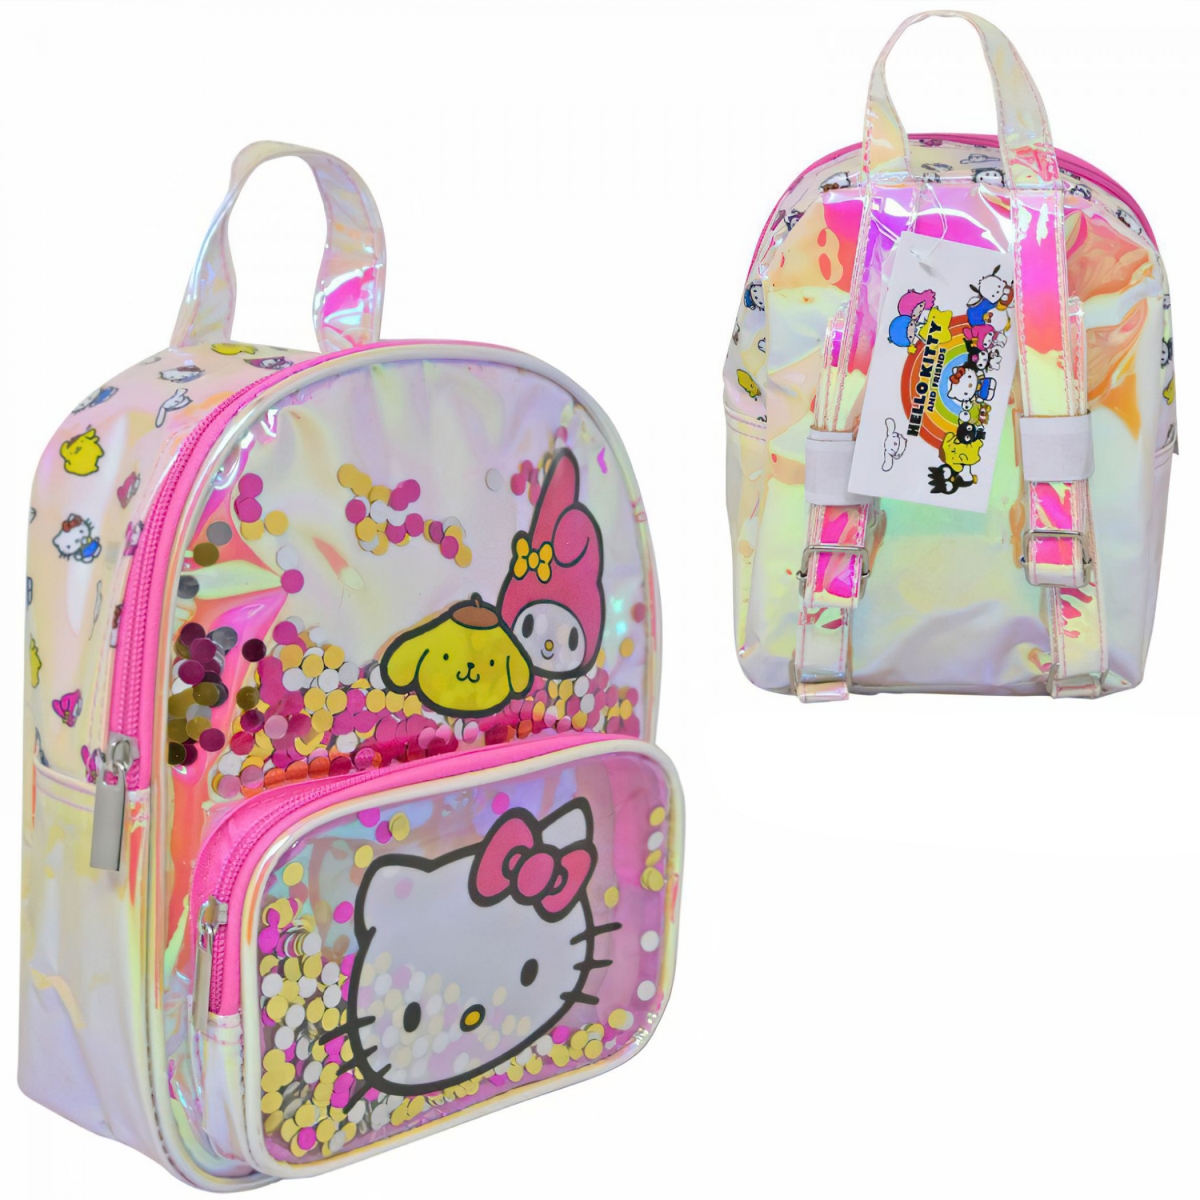 Hello Kitty 875793 10 in. Hello Kitty & Friends Iridescent Mini Backpack